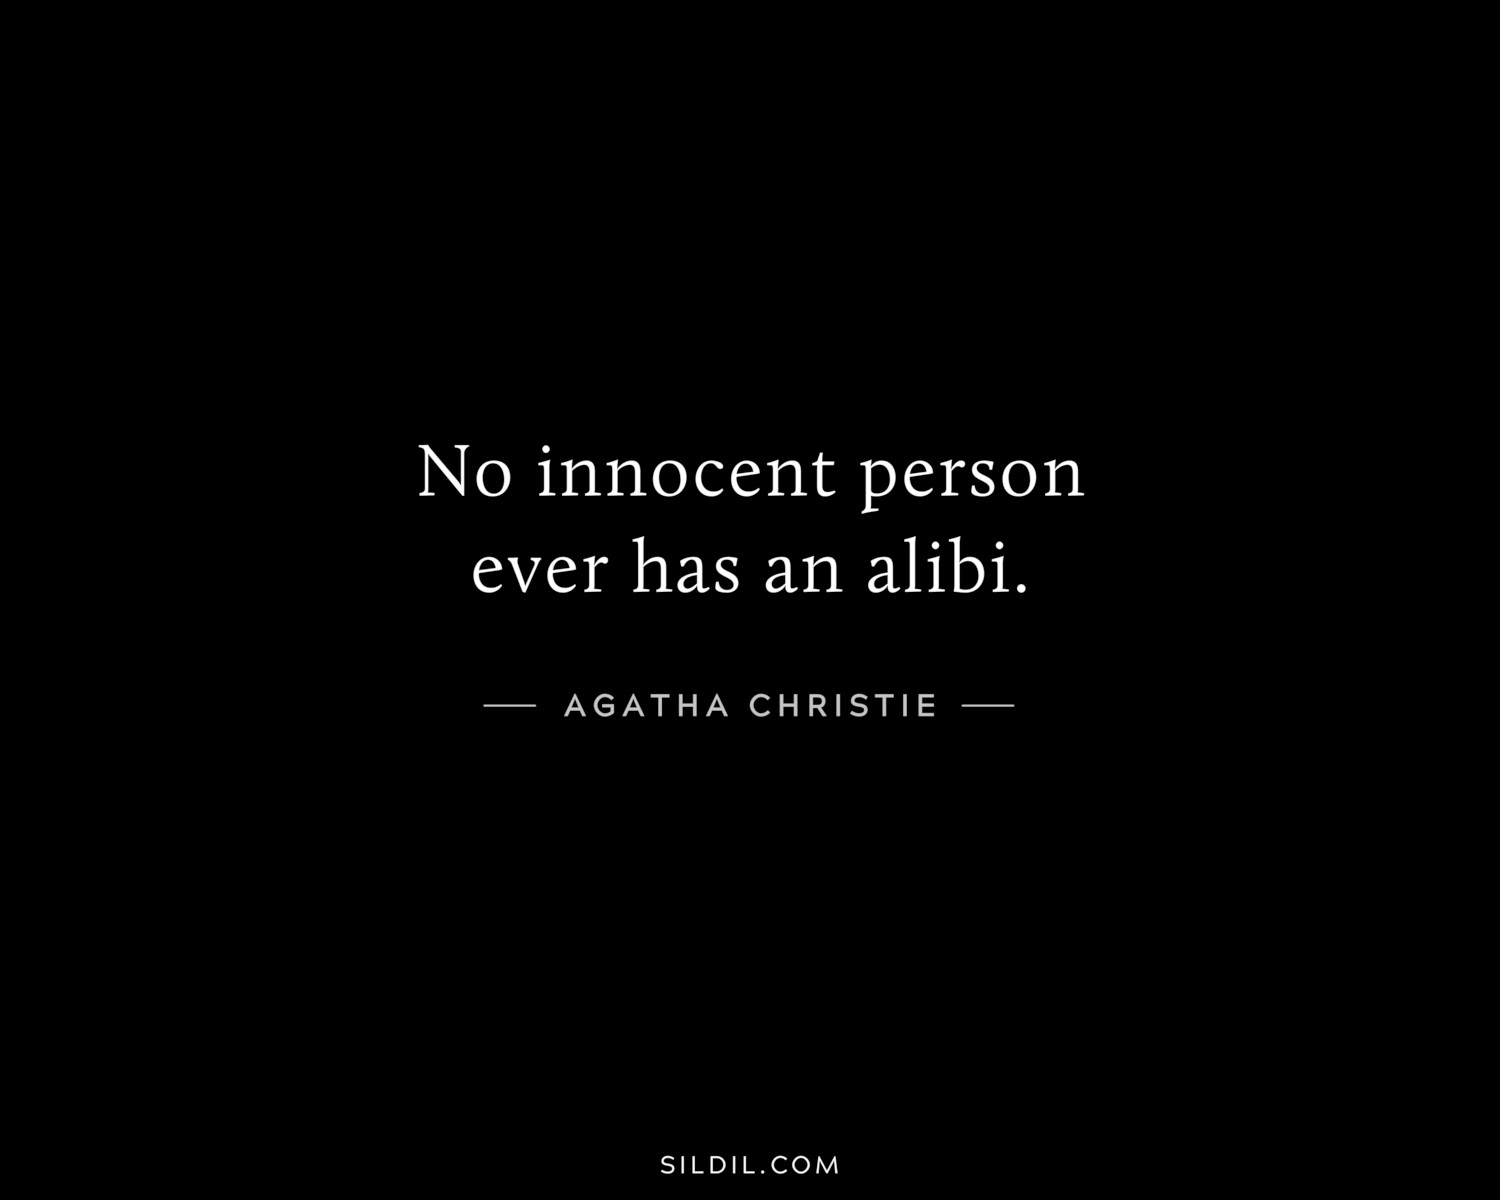 No innocent person ever has an alibi.